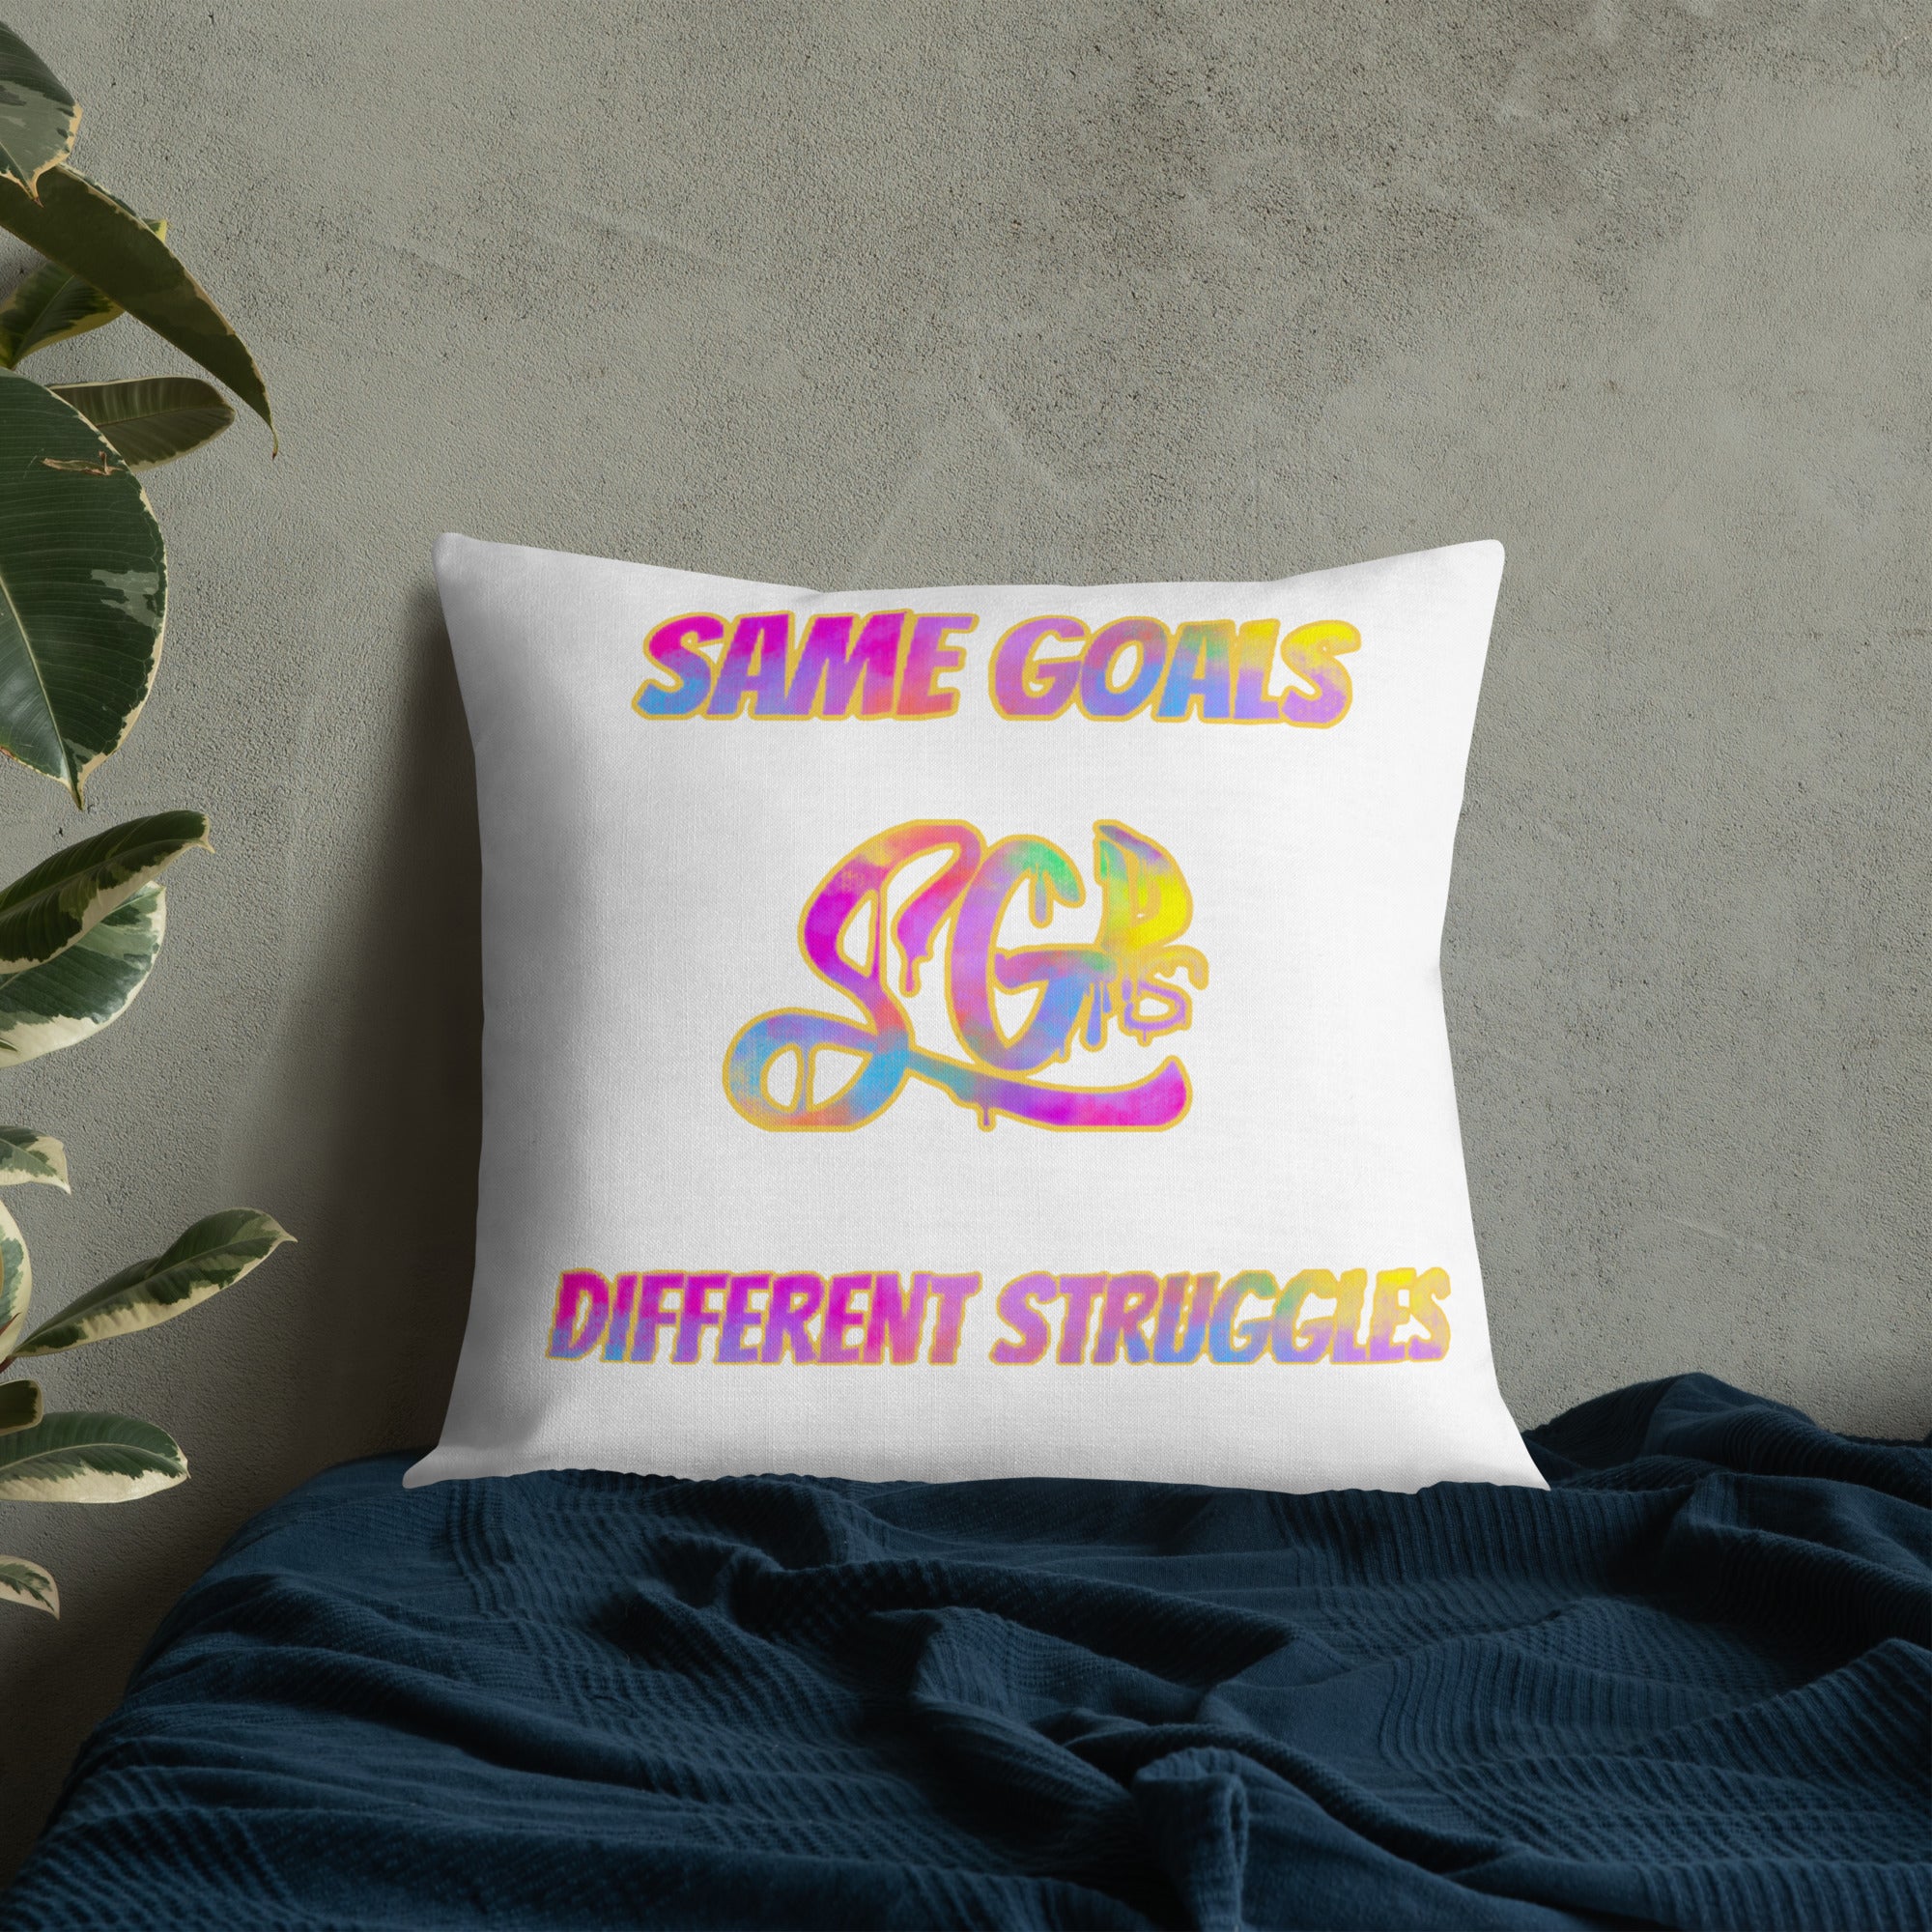 Same Goals Different Struggles Premium Pillow